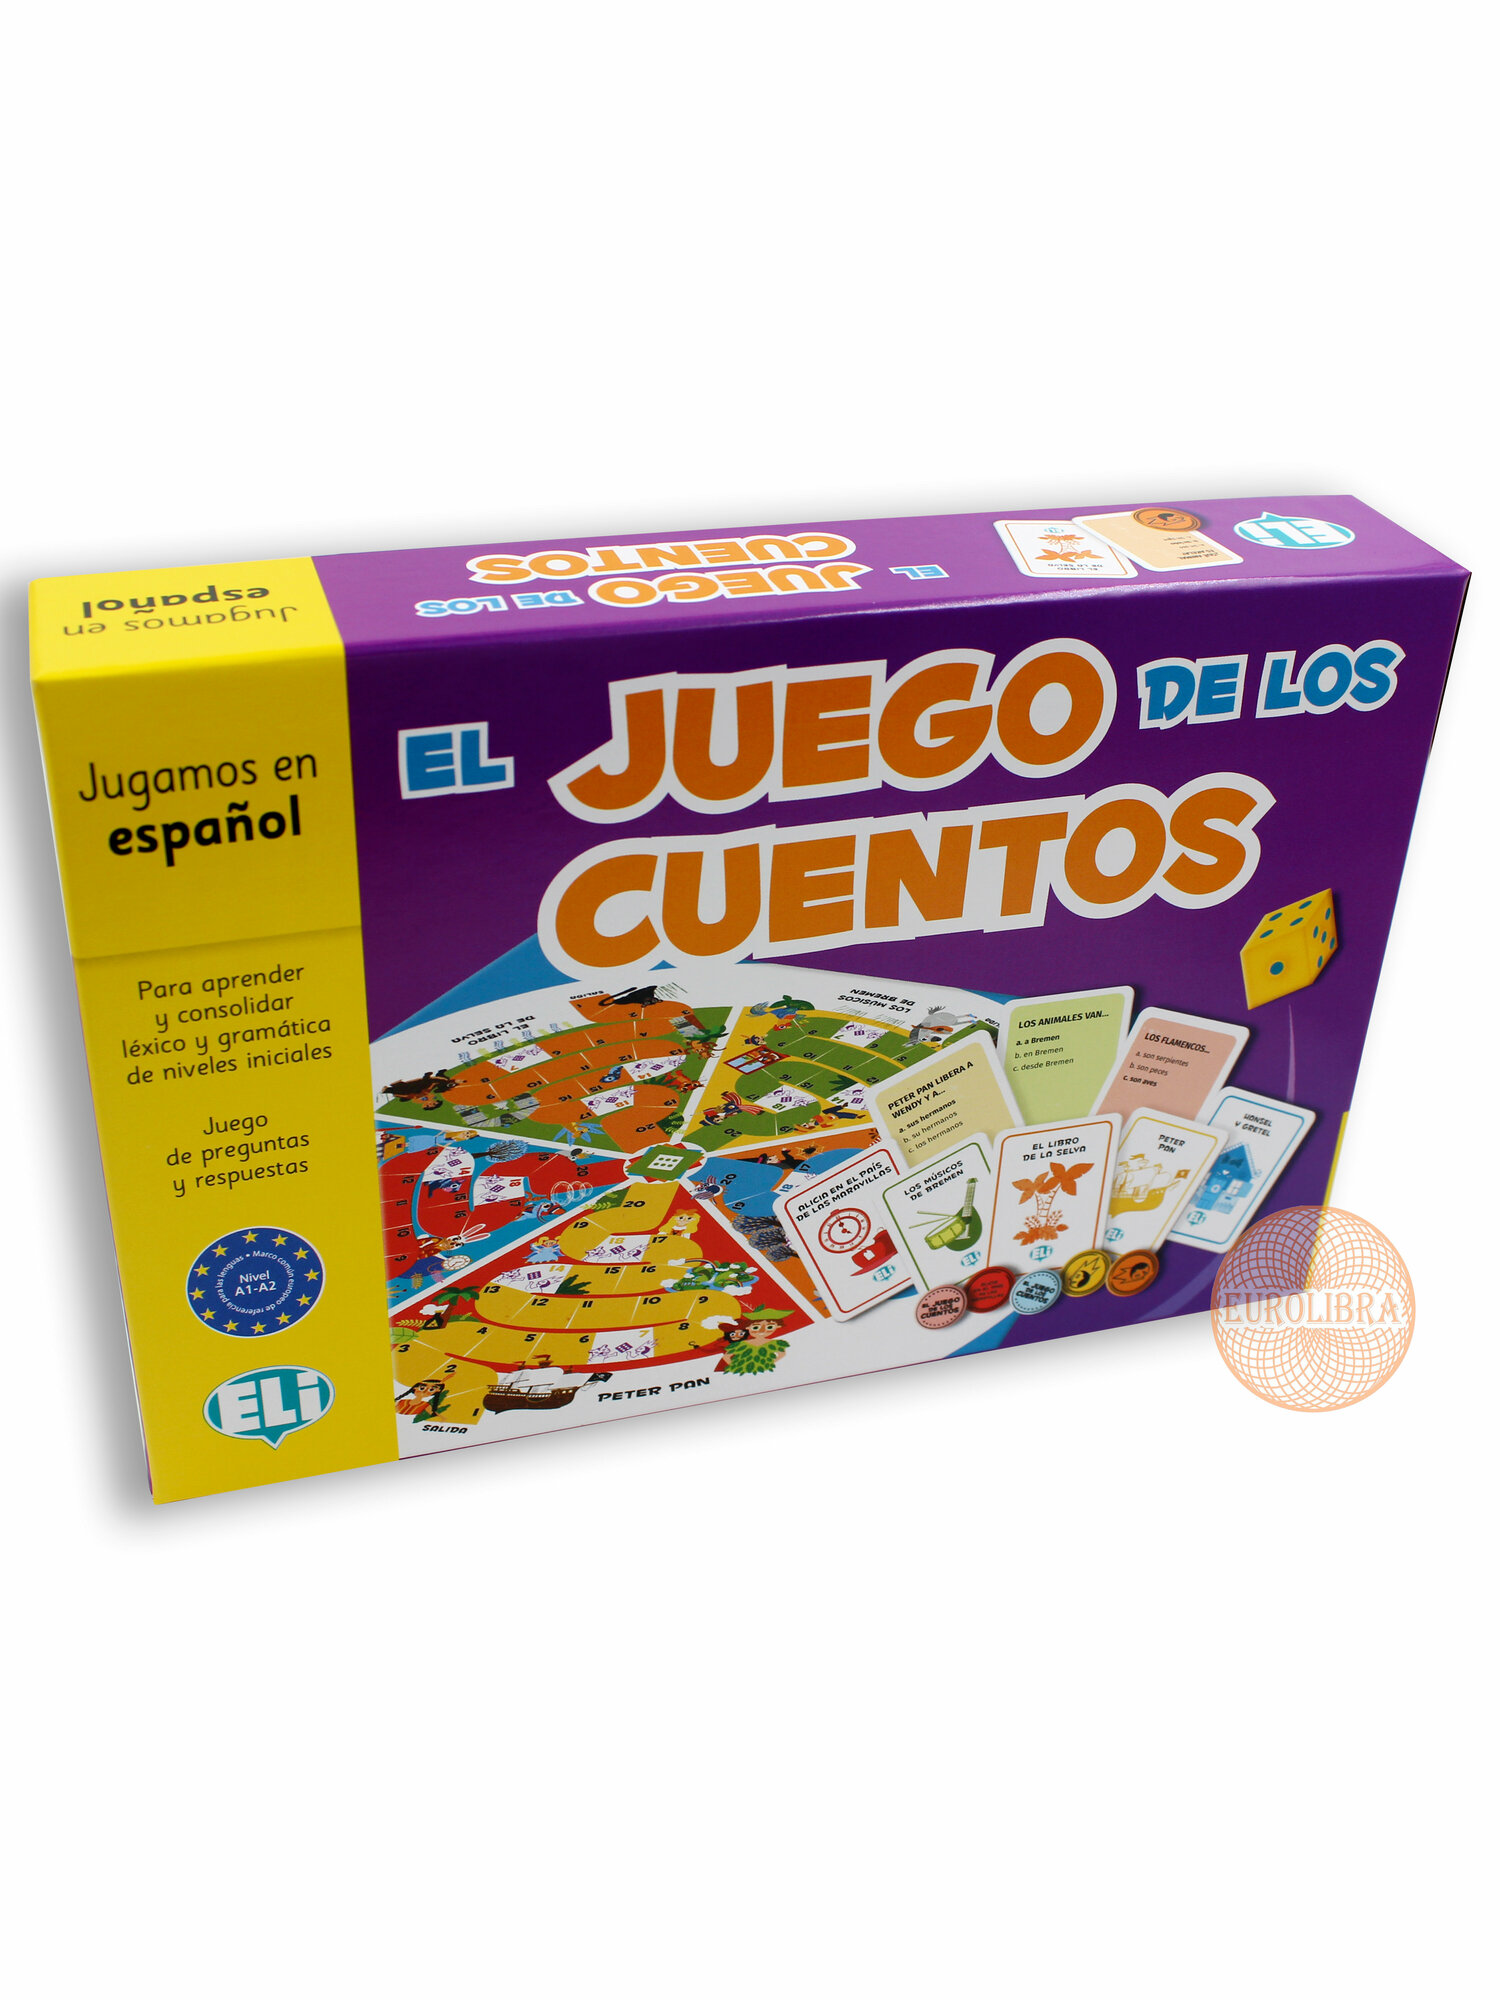 EL JUEGO DE LOS CUENTOS (A1-A2) / Обучающая игра на испанском языке "Путешествие по сказкам"